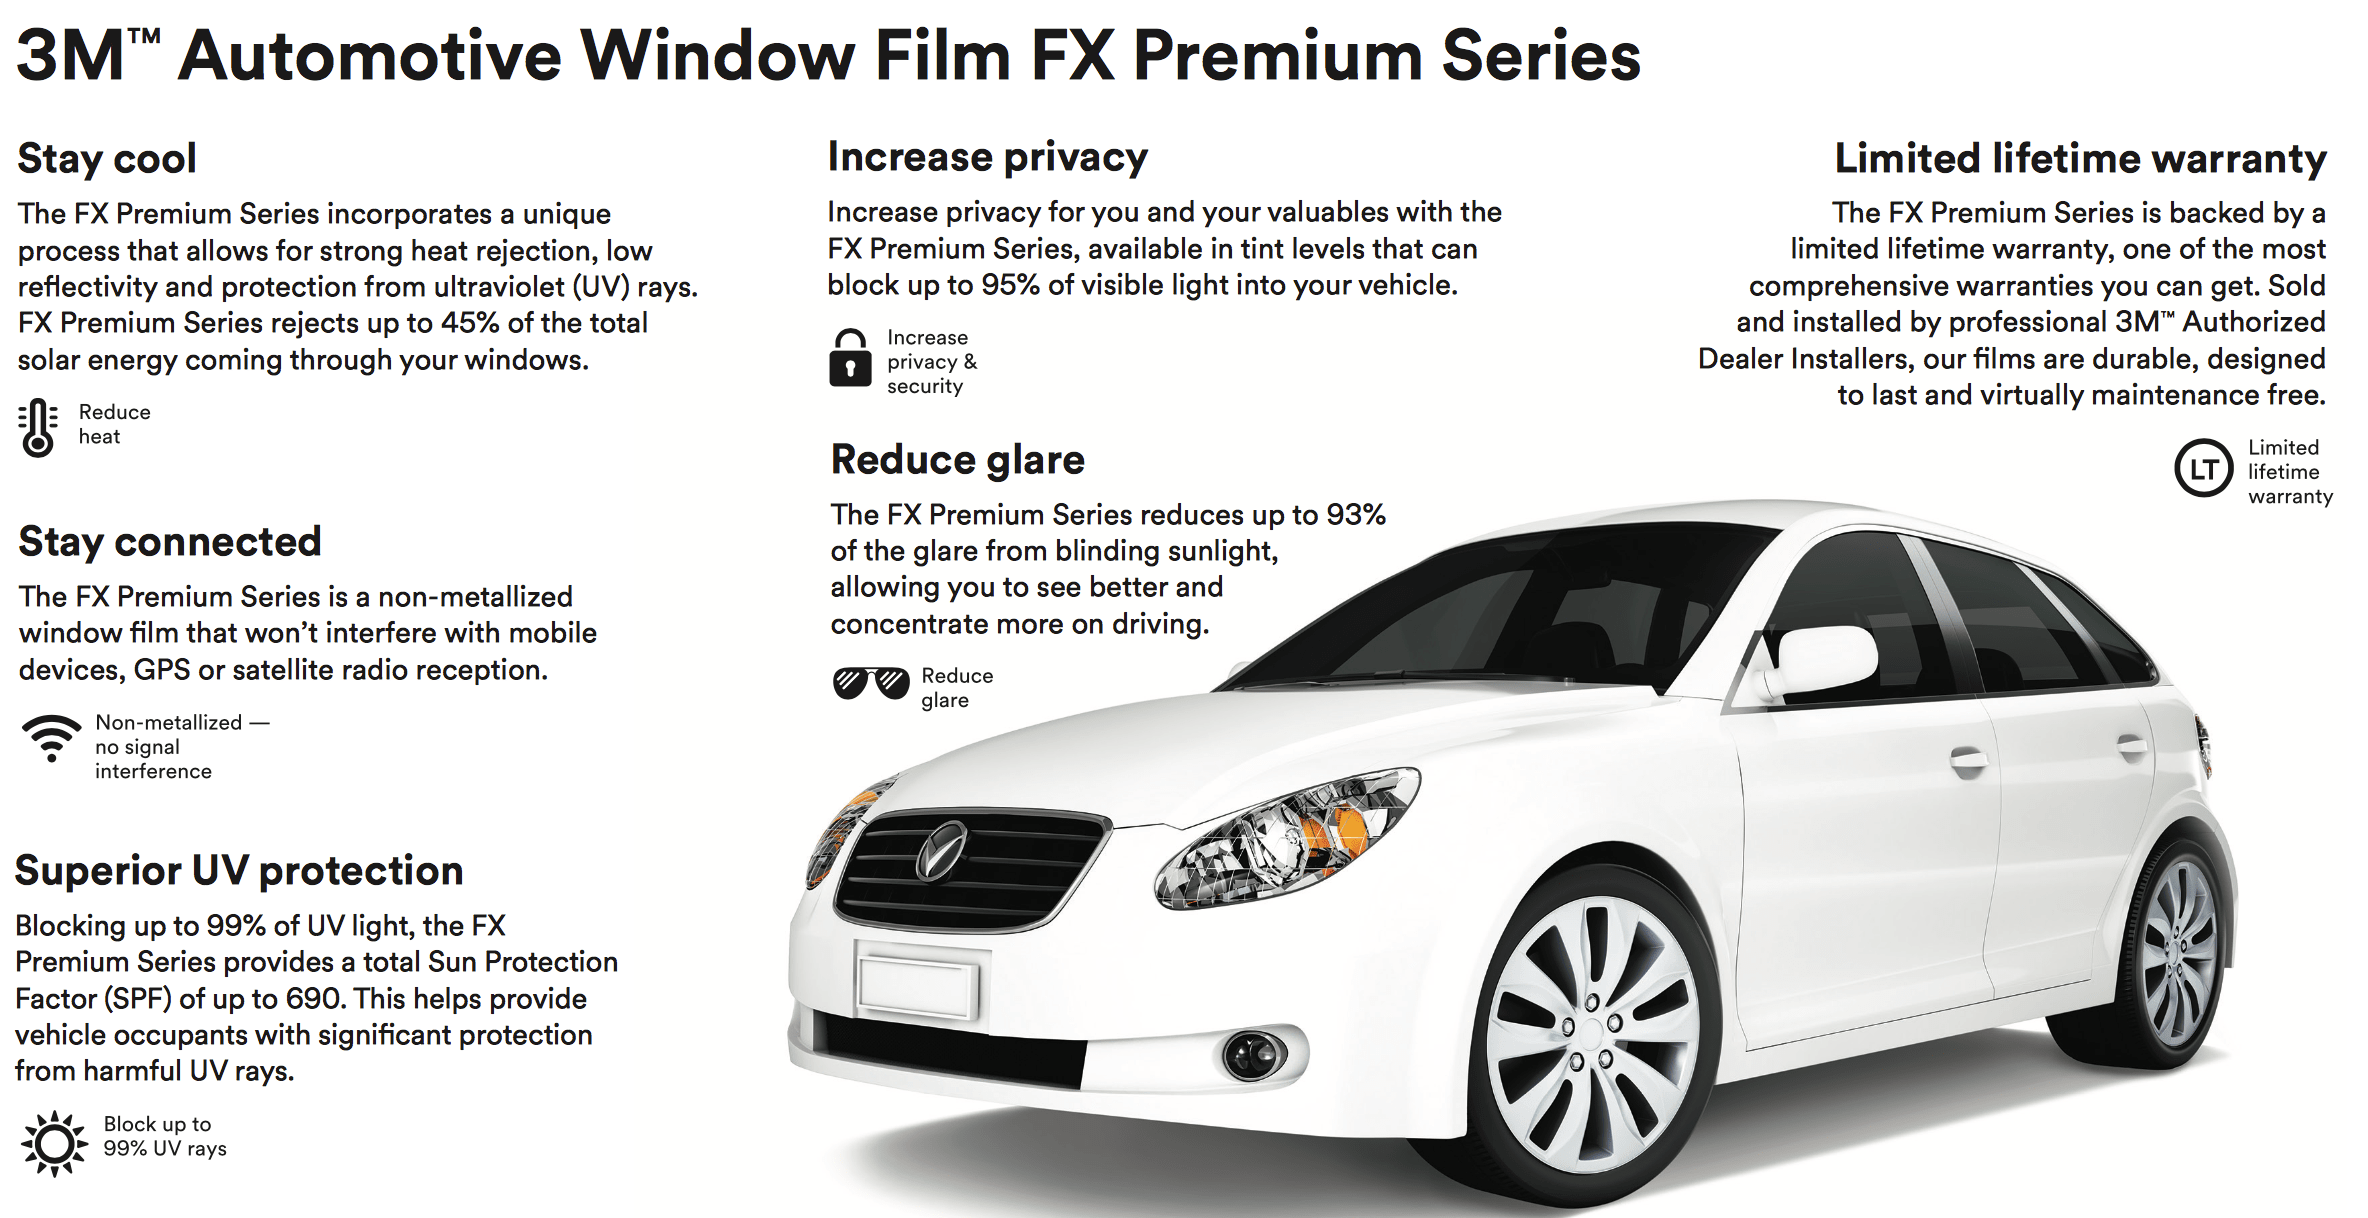 3M Automotive Window Film FX Premium Series Infographic